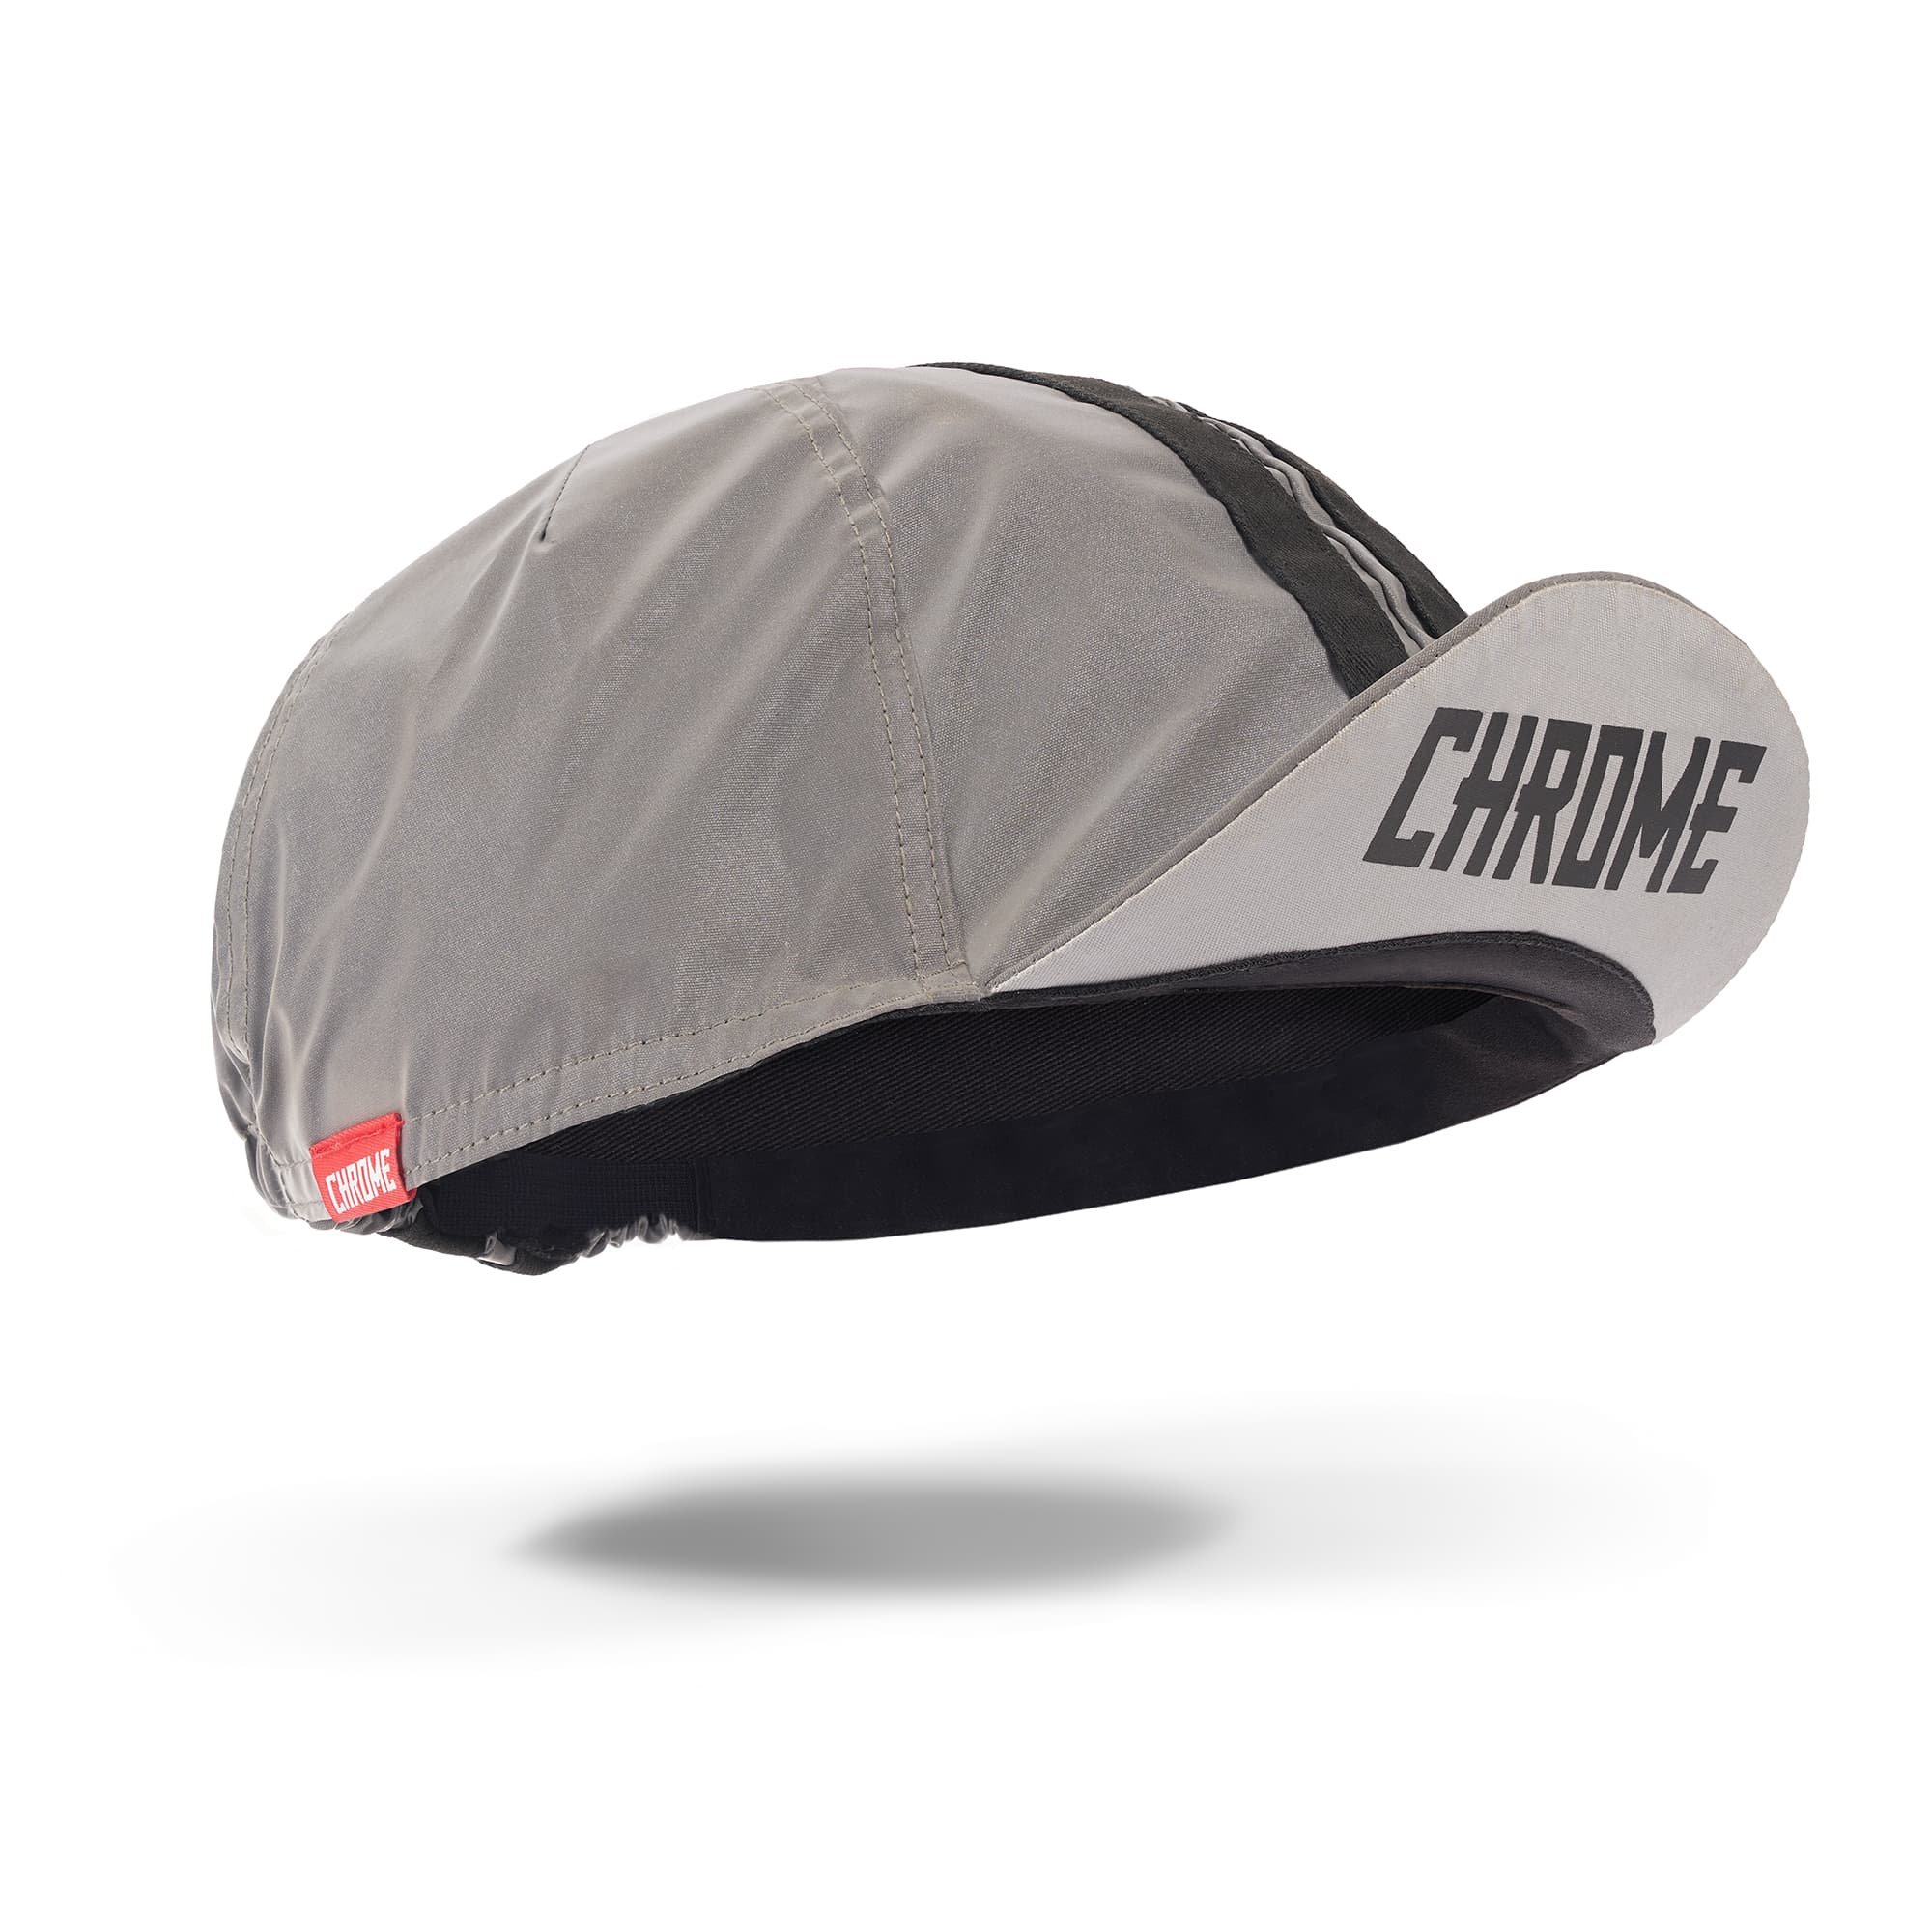 Chrome logo Cycling Cap in reflective #color_reflective